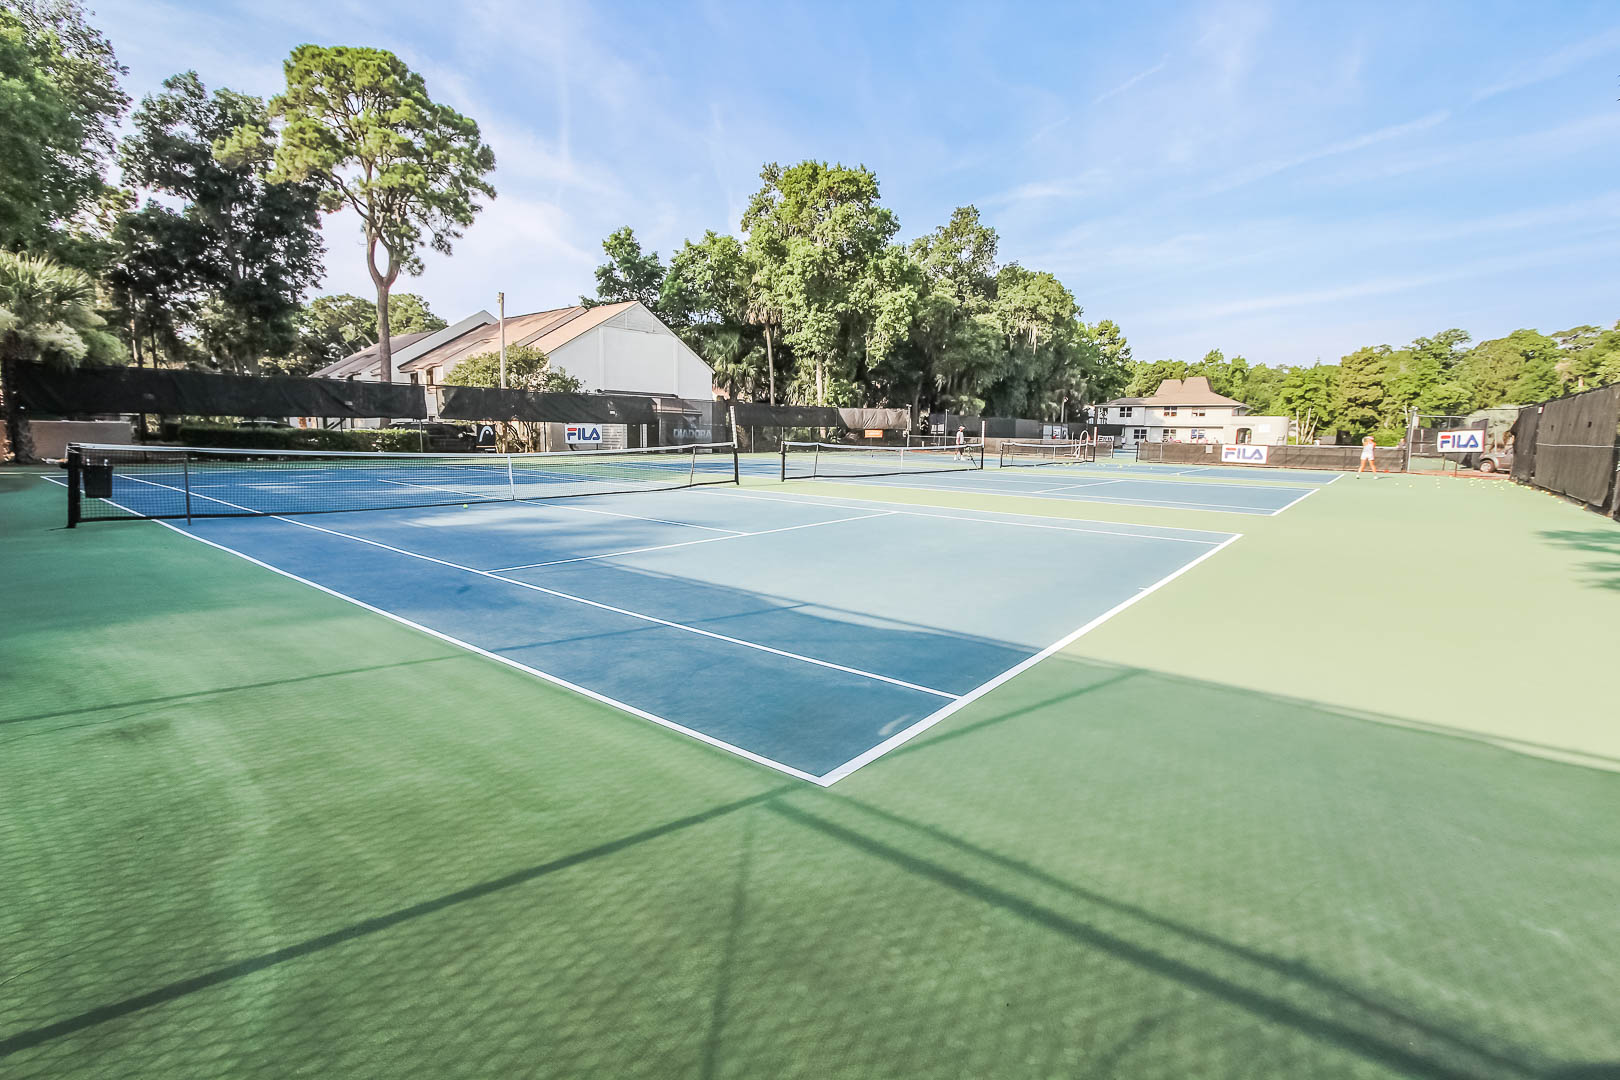 An outdoor tennis court at VRI's Players Club Resort in Hilton Head Island, South Carolina.